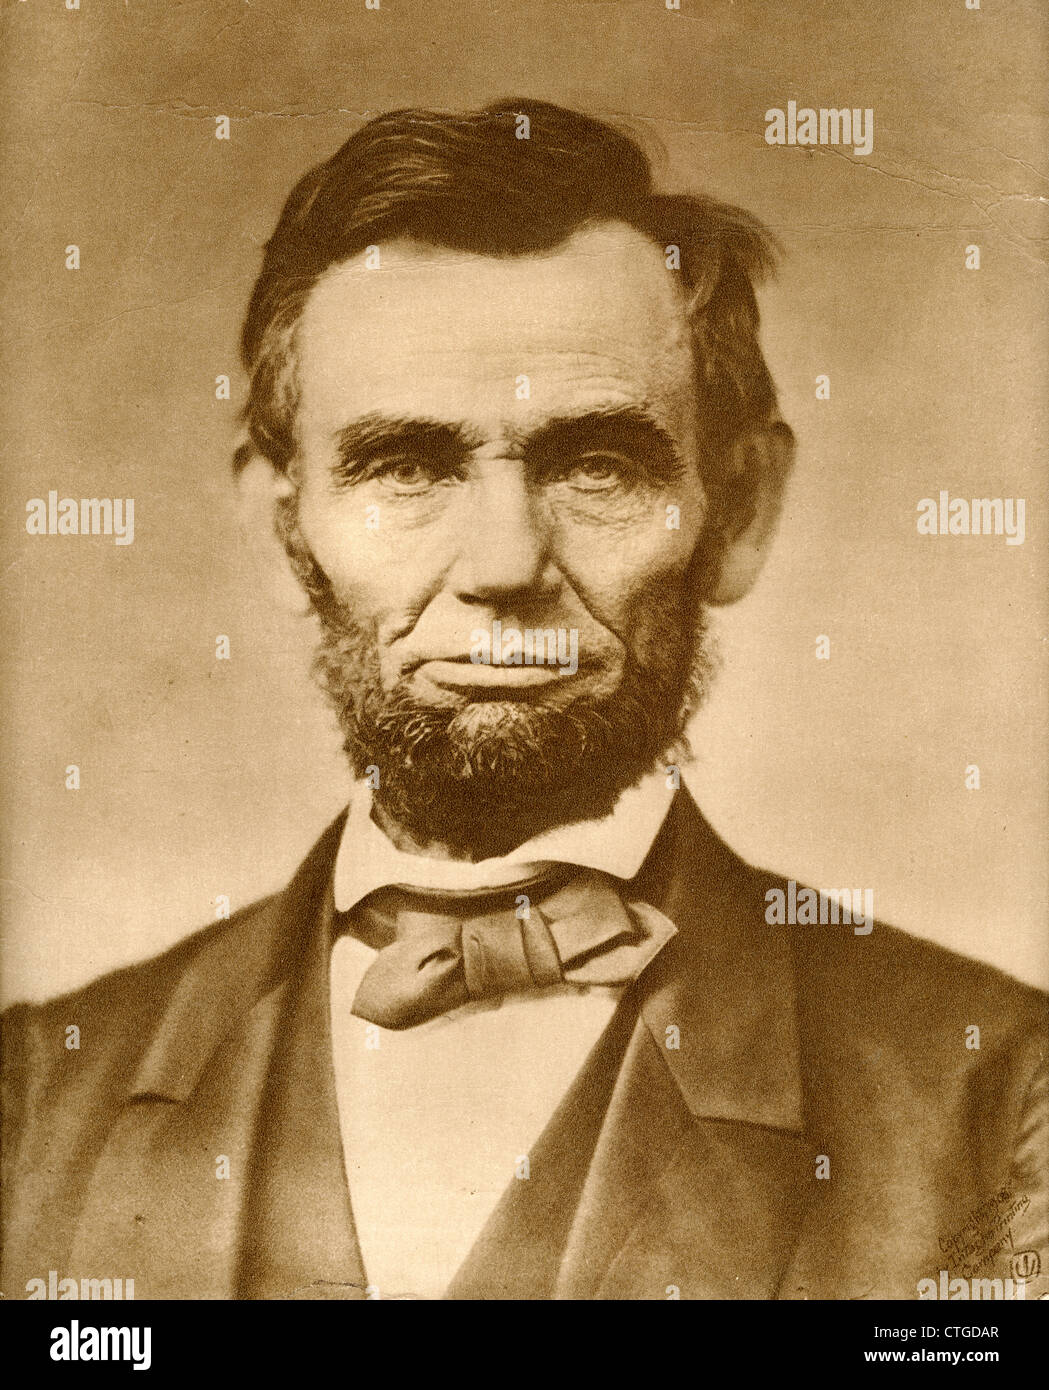 1860s 1800s NOVEMBER 1863 PORTRAIT OF ABRAHAM LINCOLN BY GARDNER Stock Photo